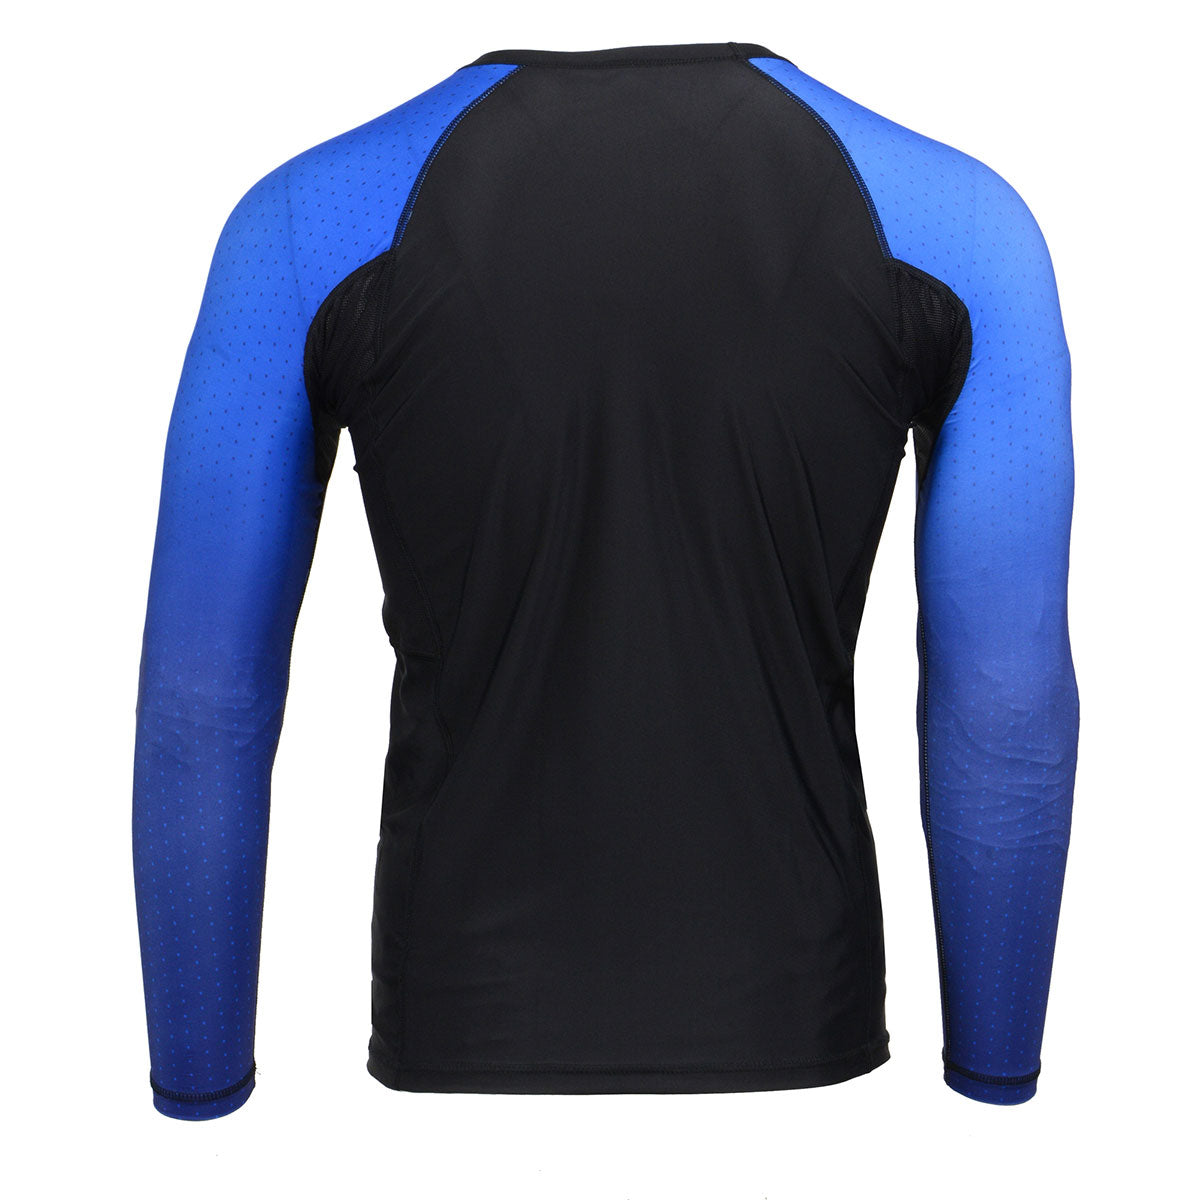 X-Fitness XFM7000 Men's Black and Blue Long Sleeve Compression Rash Guard Athletic Shirt- MMA, BJJ, Wrestling, Cross Training